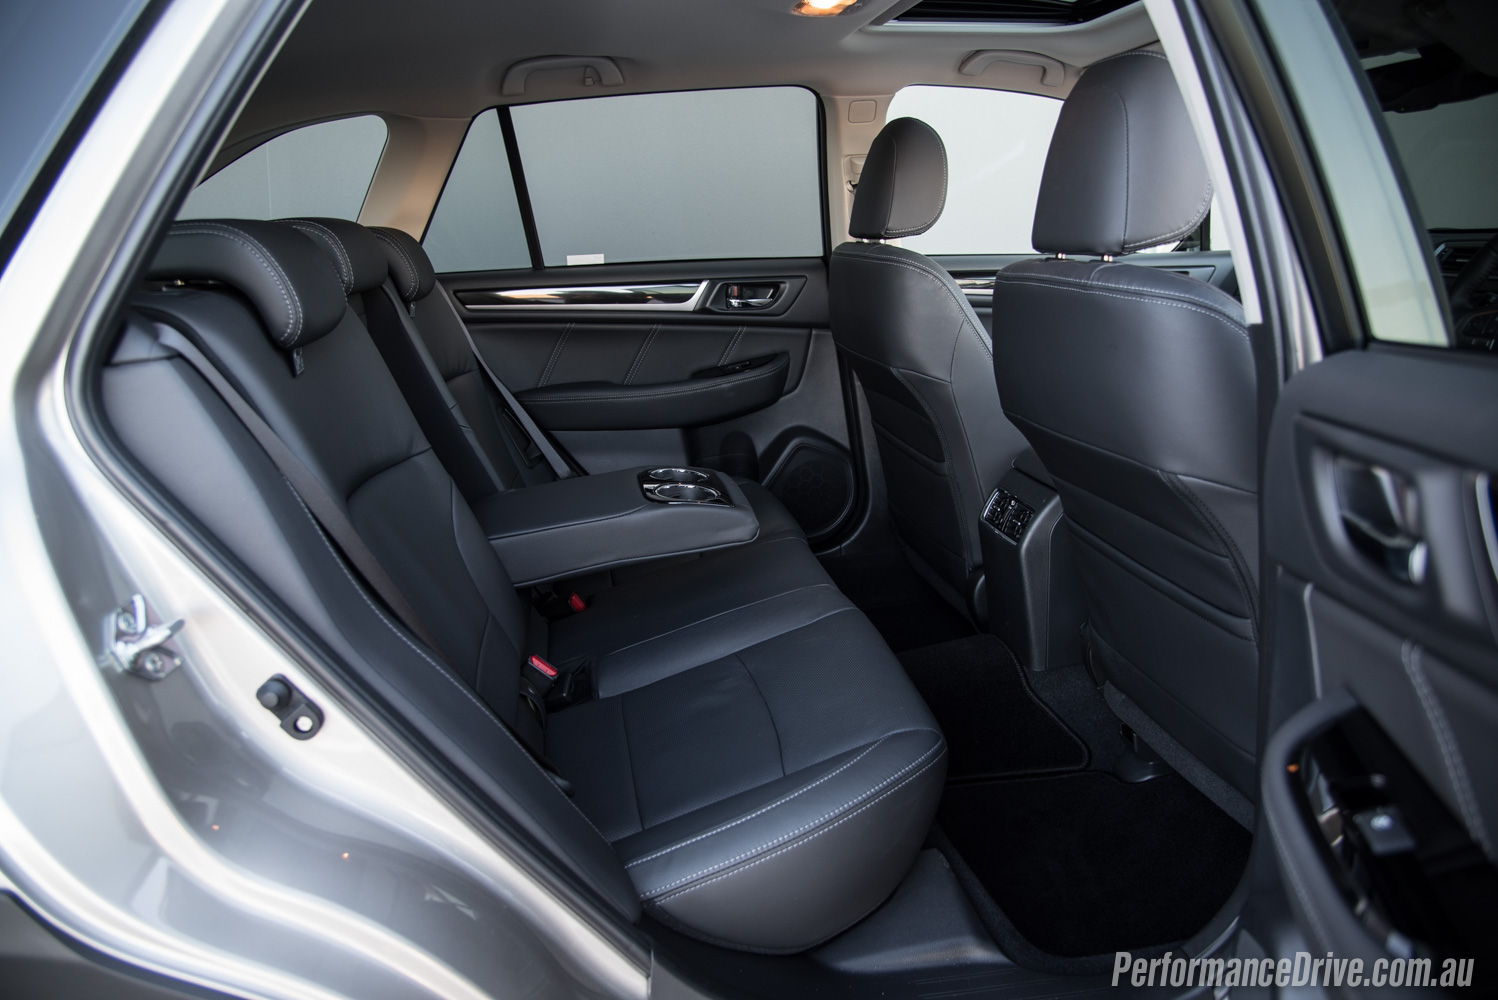 2016 Subaru Outback 3 6r Review Video Performancedrive